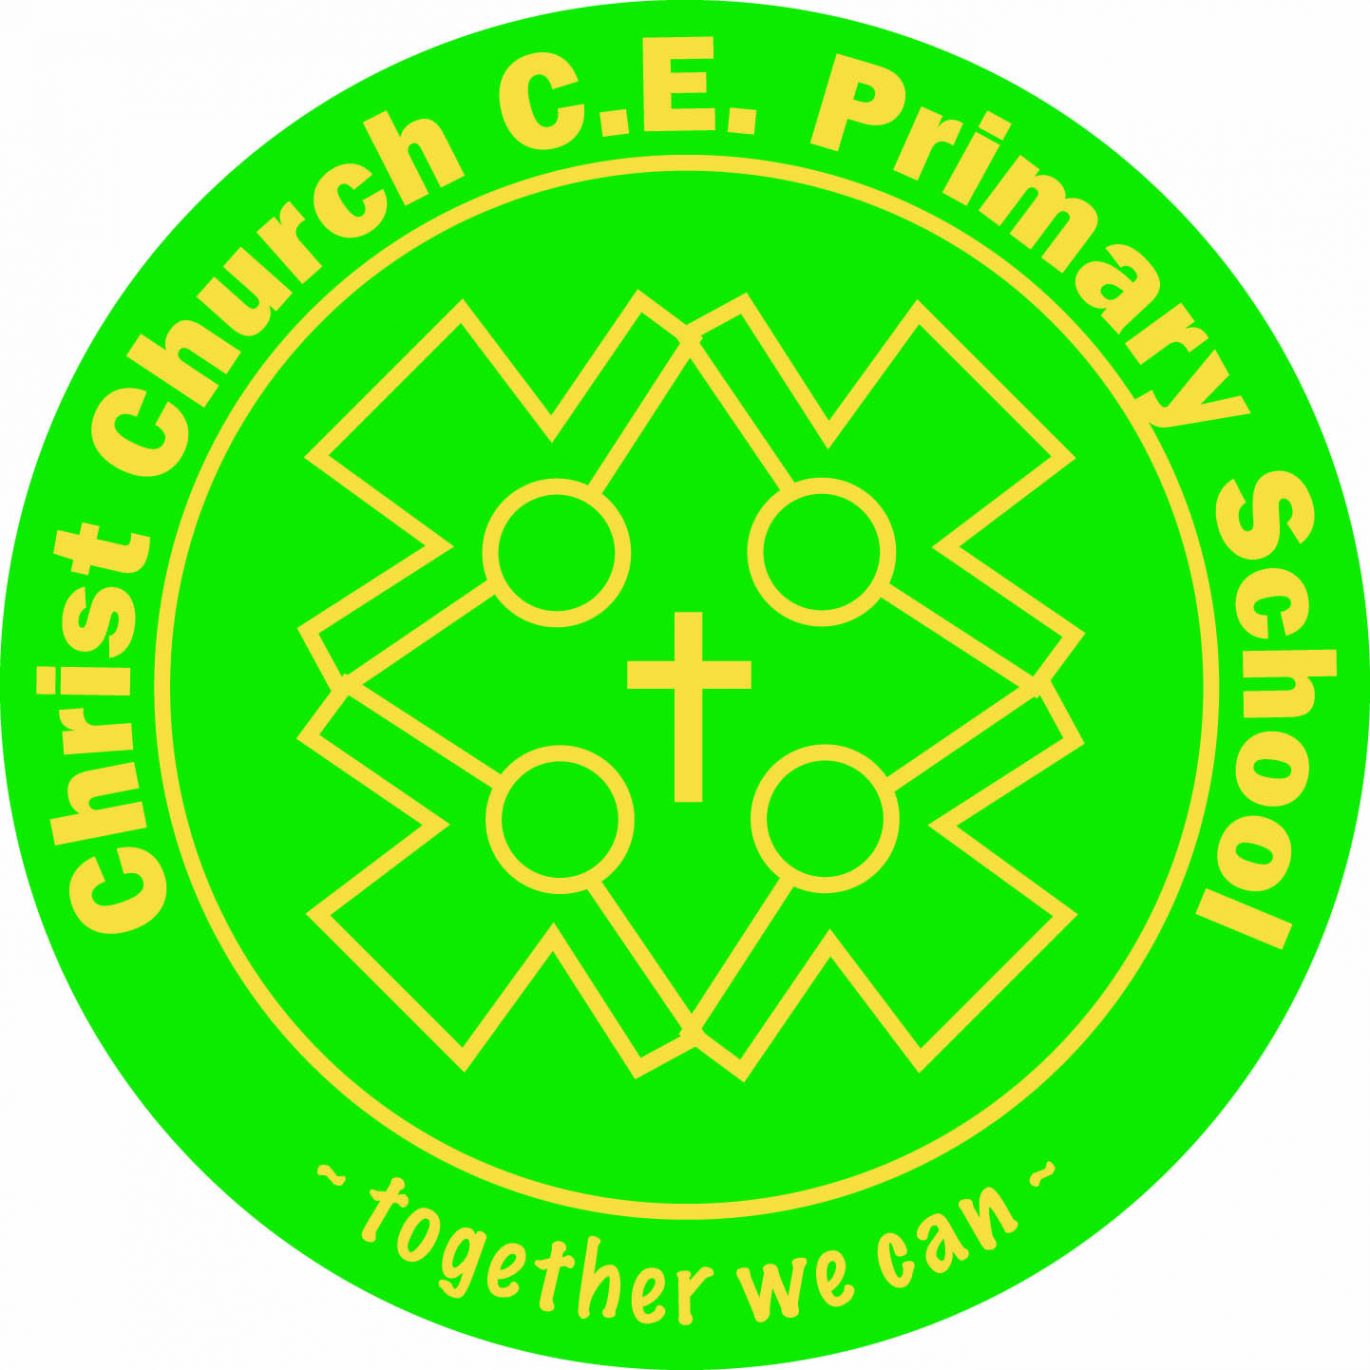 Christ Church CE Primary School